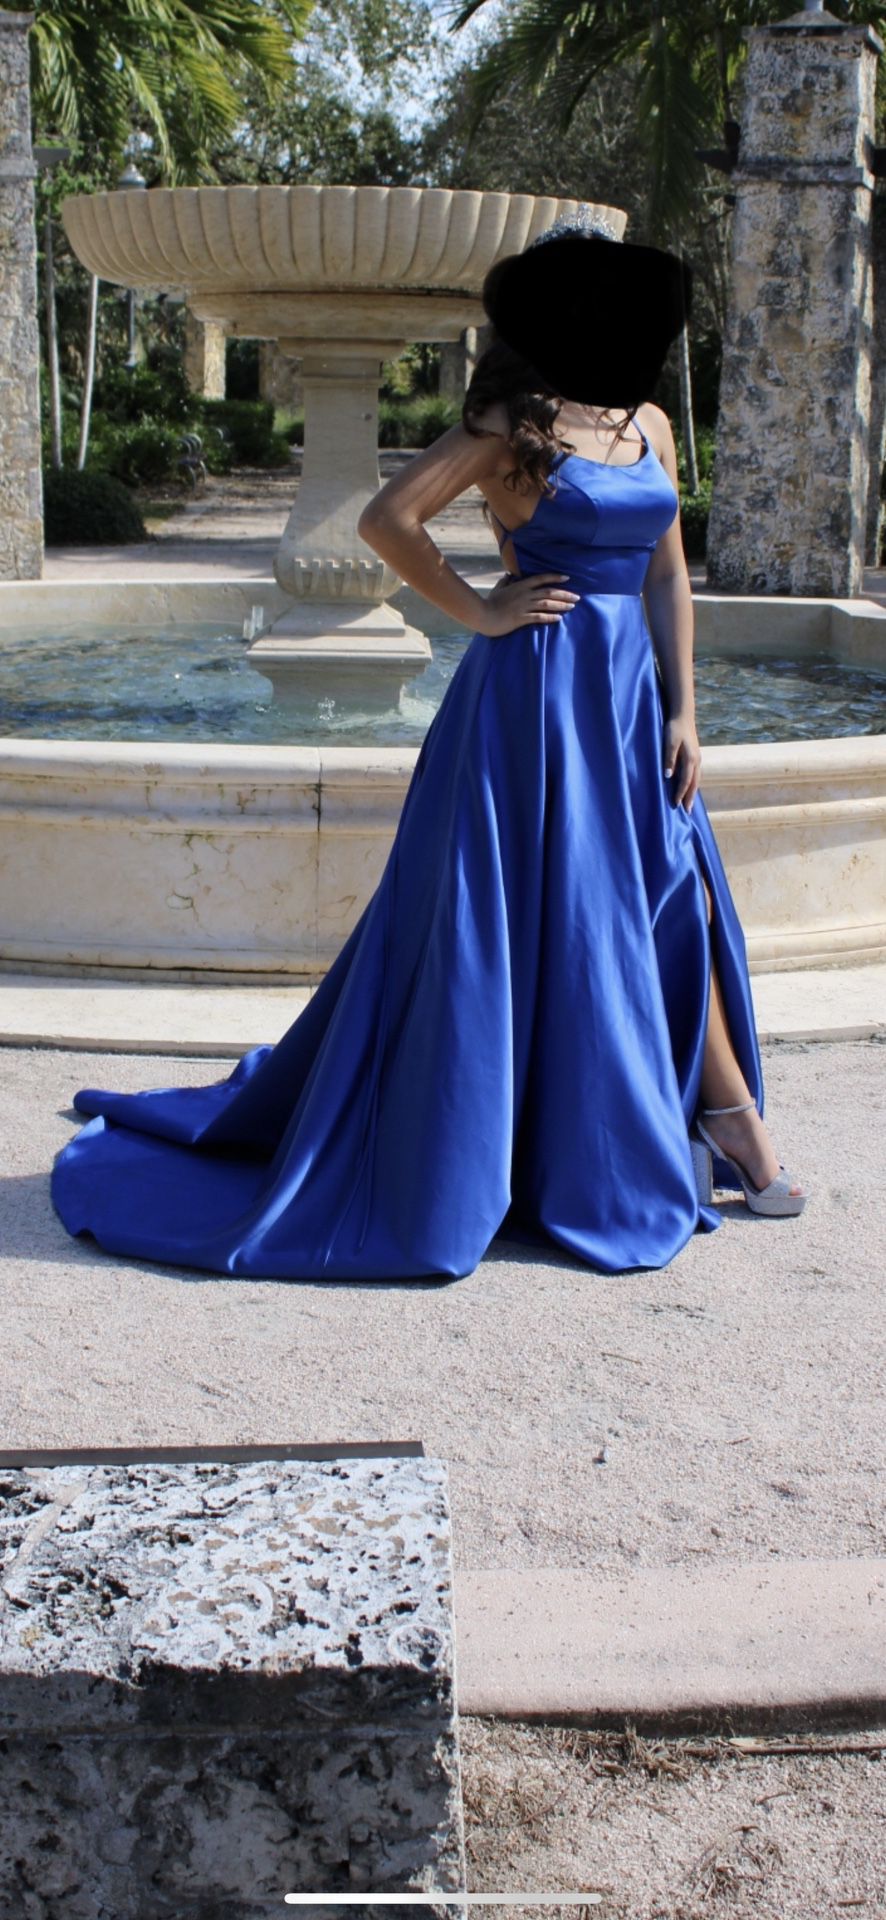 Royal Blue Dress 